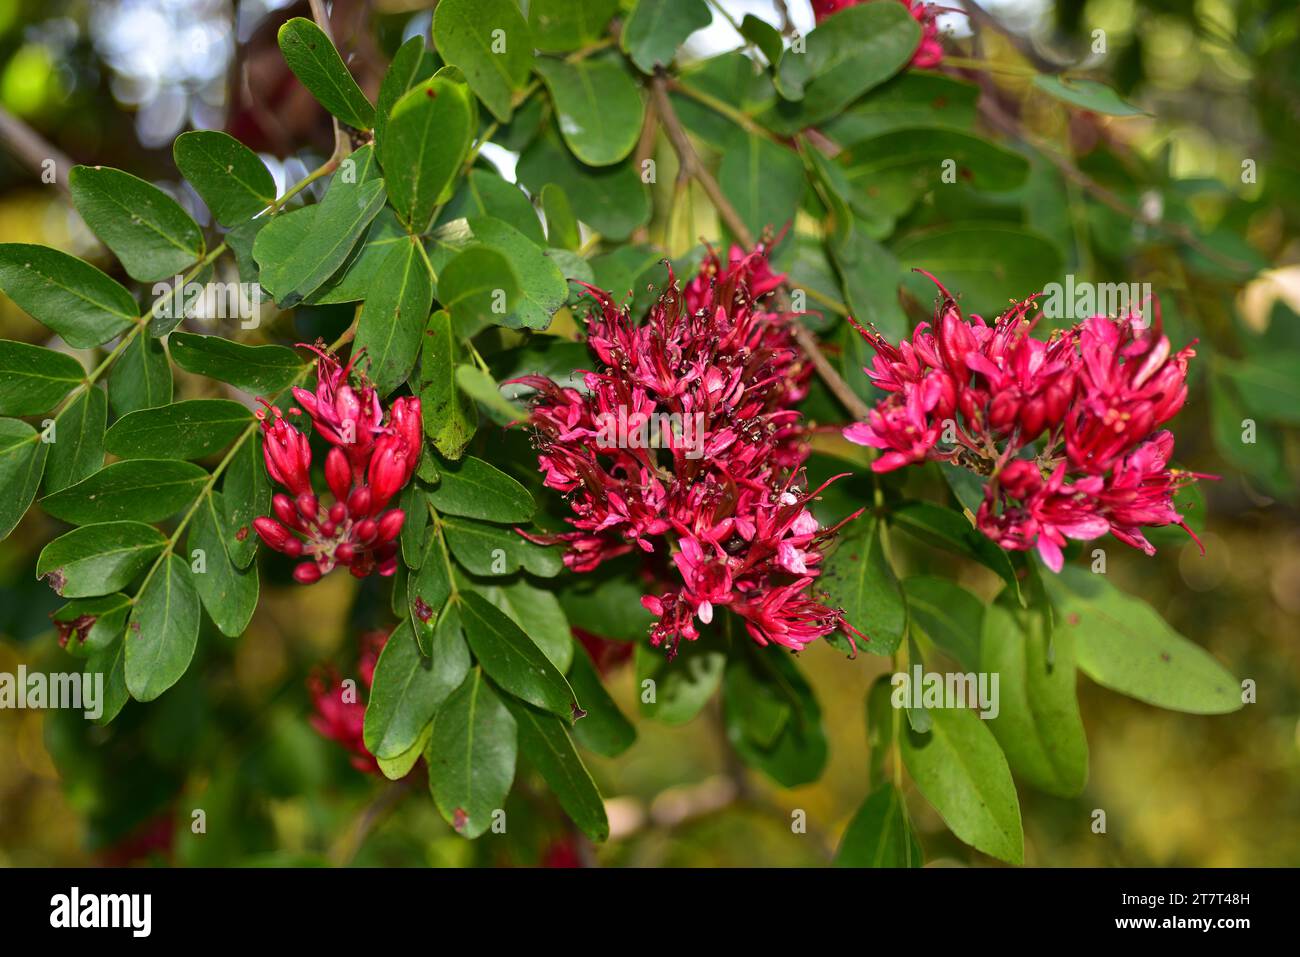 Weeping boer-bean (Schotia brachypetala or Schotia latifolia) is a deciduous tree native to southern Africa. Flowers detail. Stock Photo